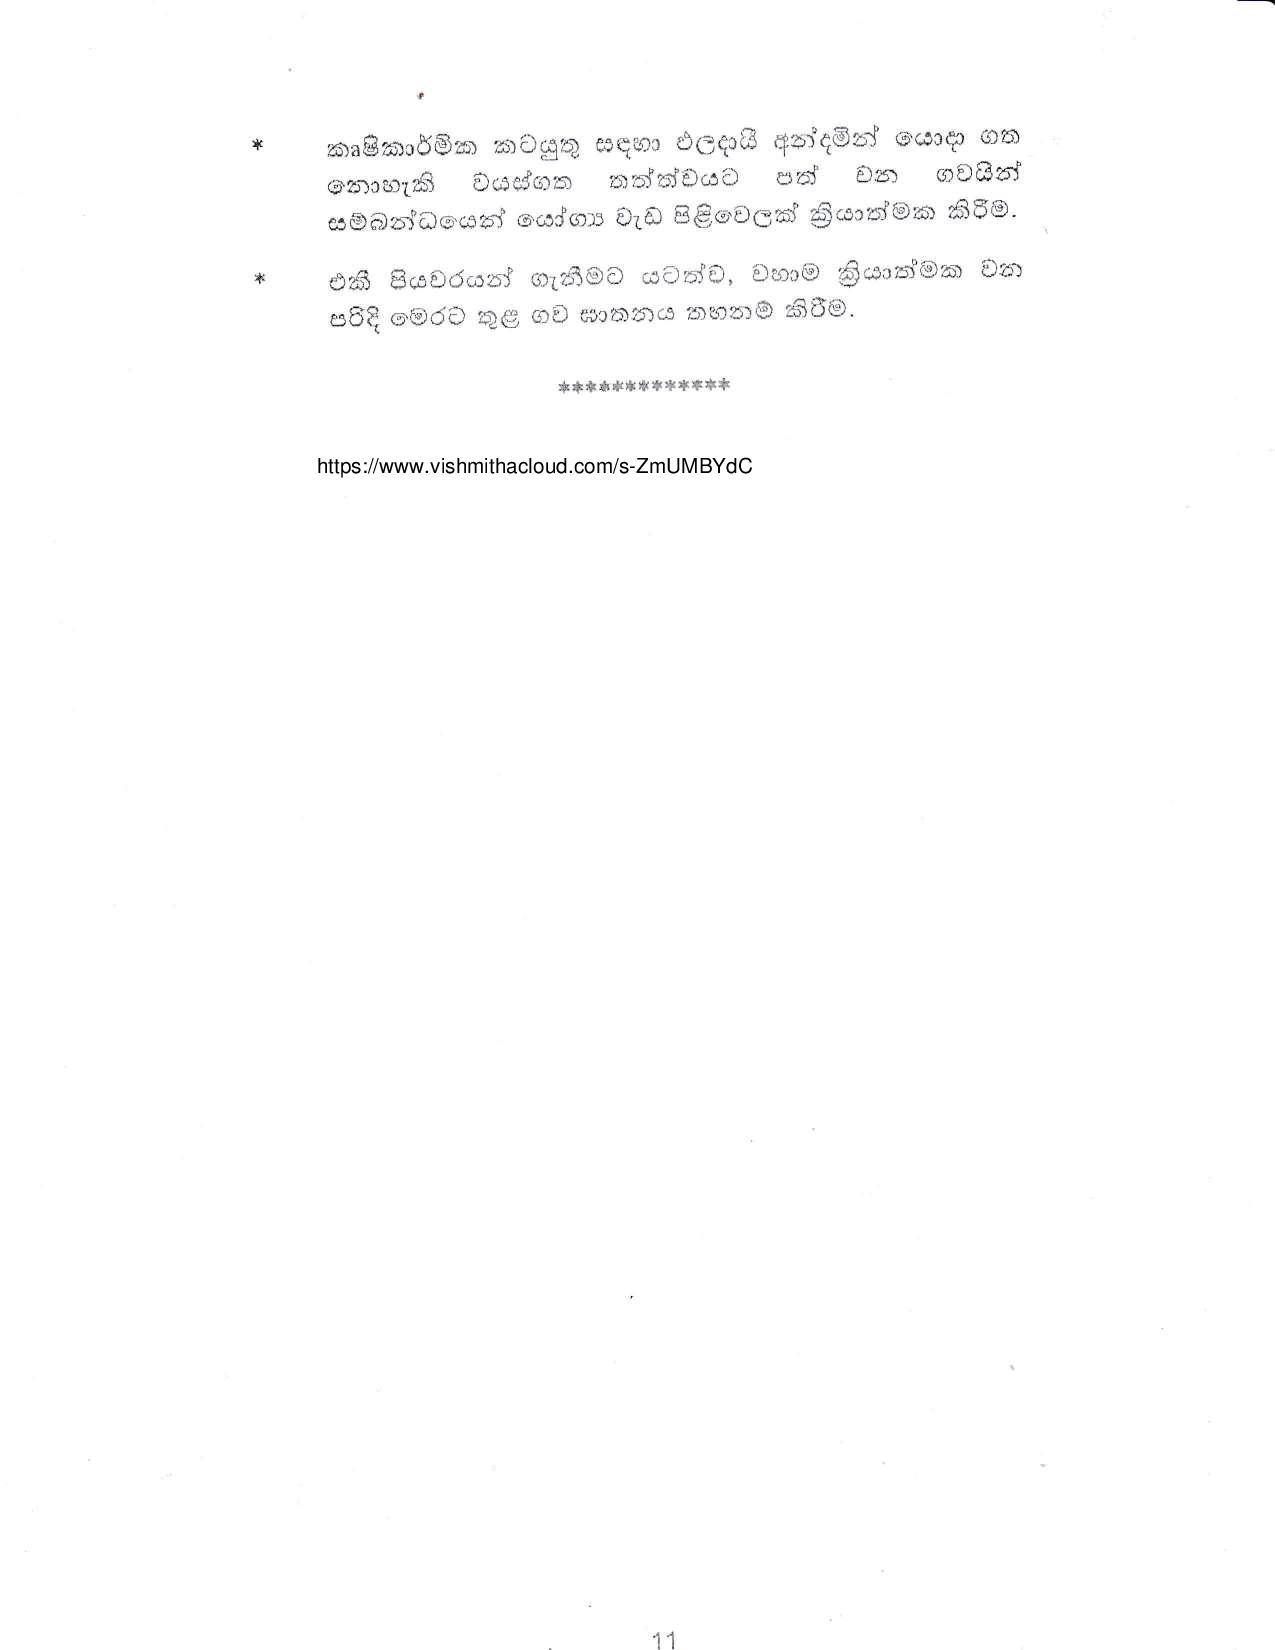 Cabinet Desicion on 28.09.2020 Sinhala page 011